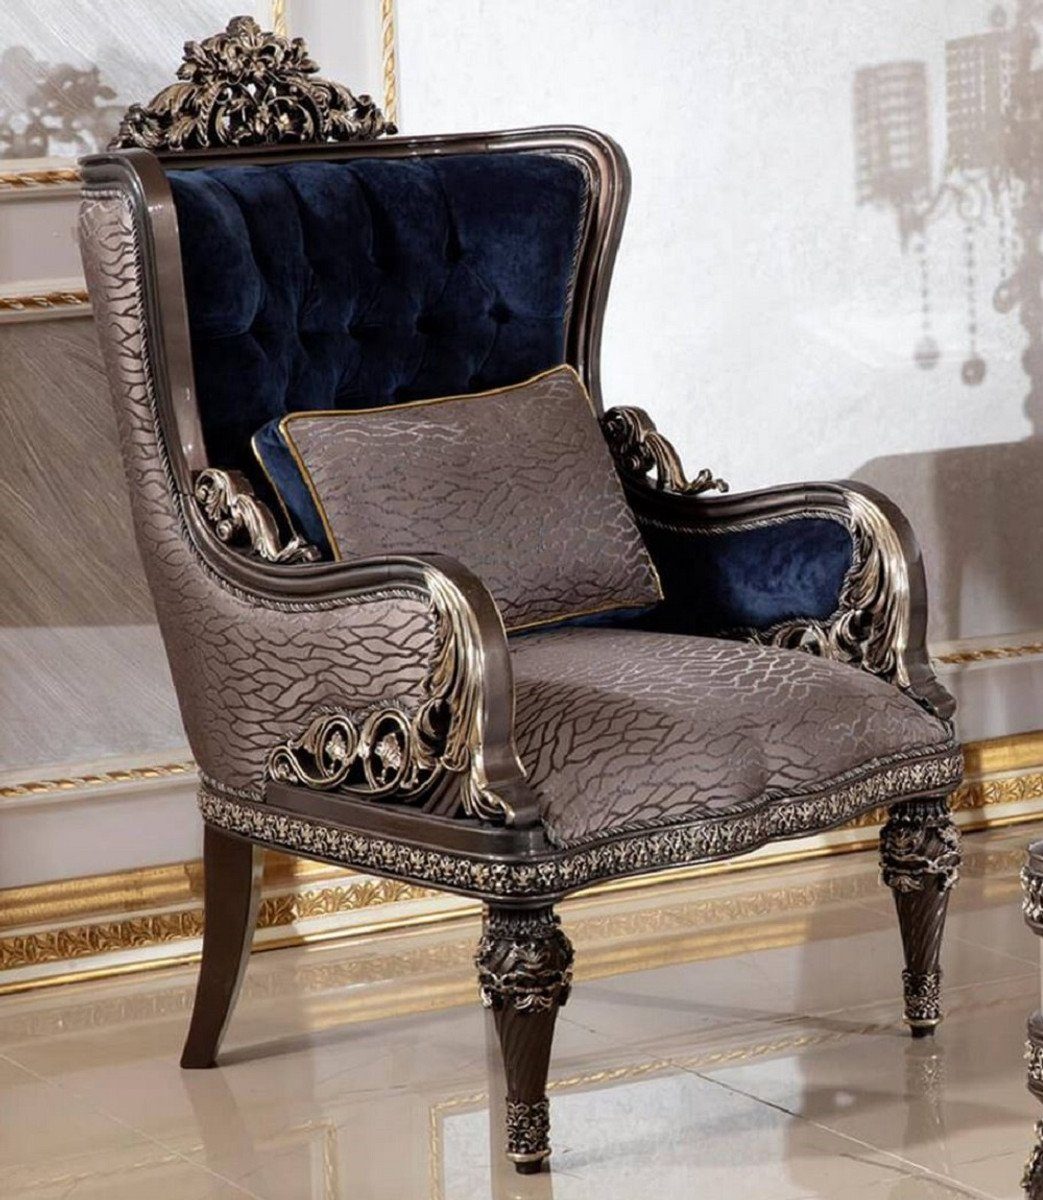 Casa Padrino Sessel Luxus Barock Sessel Royalblau / Grau / Dunkelbraun / Gold - Handgefertigter Barockstil Wohnzimmer Sessel mit elegantem Muster - Barock Wohnzimmer Möbel - Edel & Prunkvoll